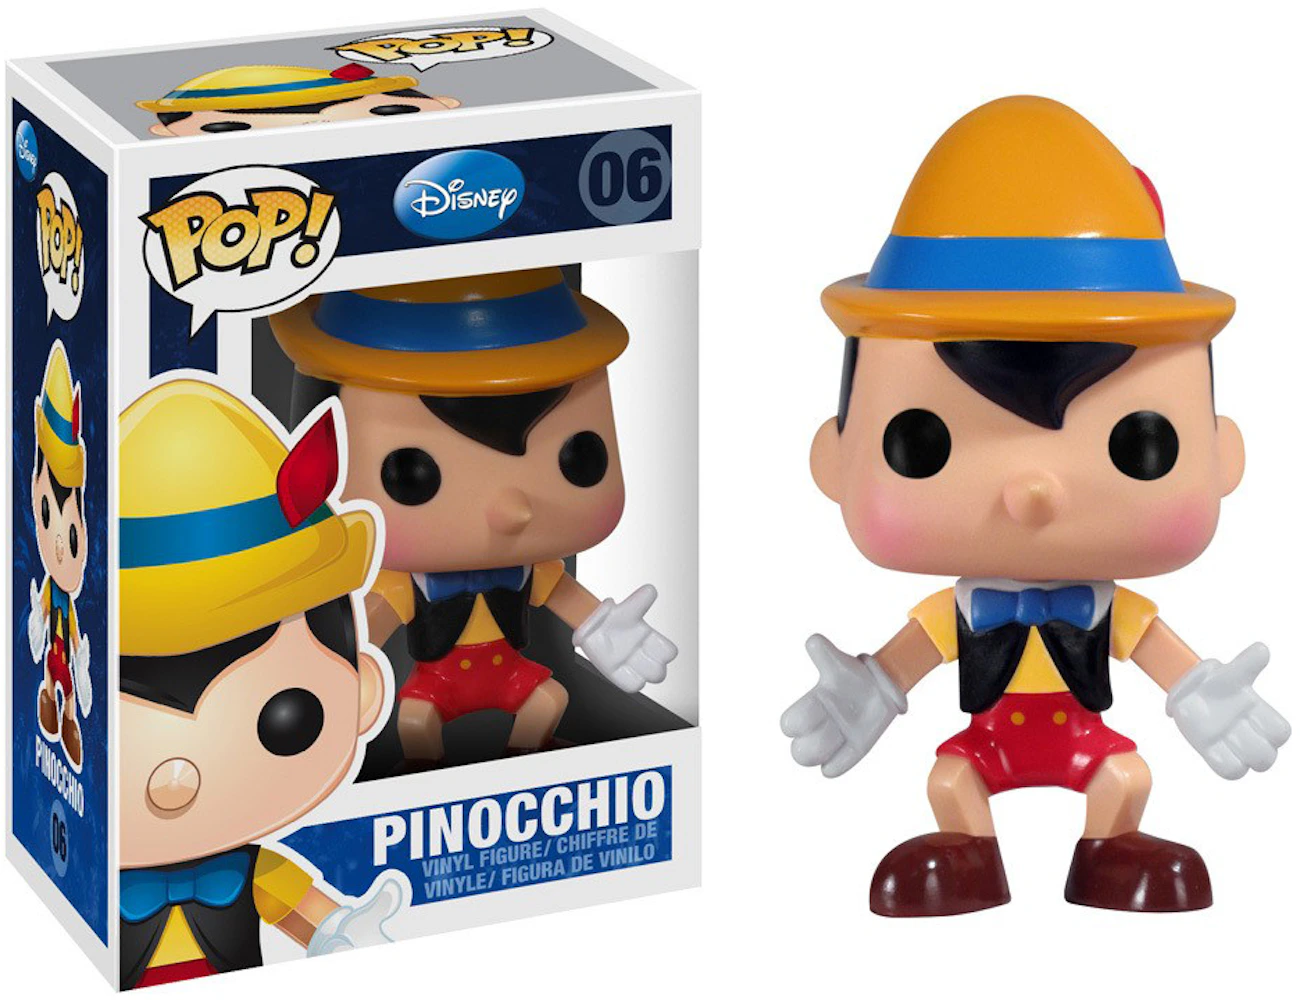 Funko Pop! Disney Pinocchio - Figure US #06